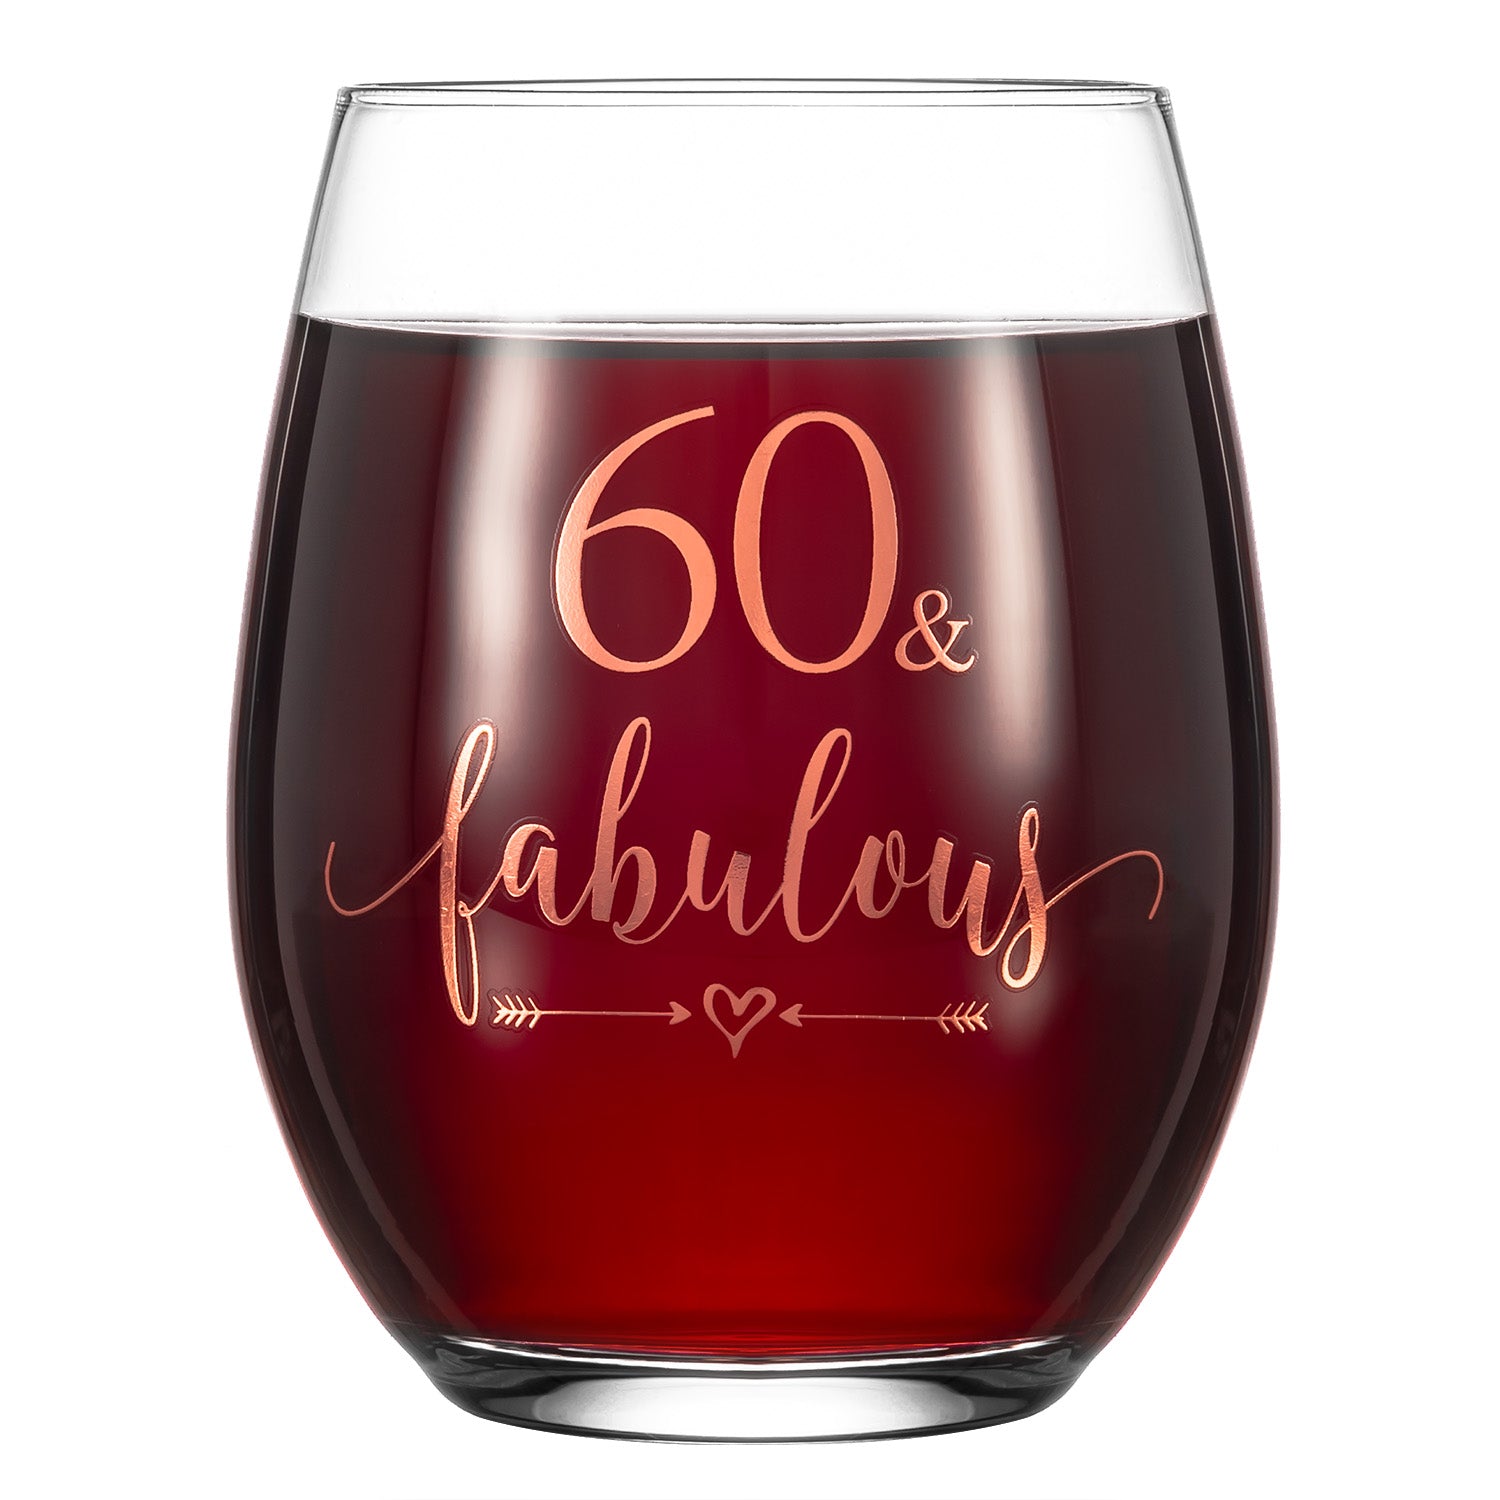 Crisky Rose Gold 60 & Fabulous Wine Glass for Women 60th Birthday Gift